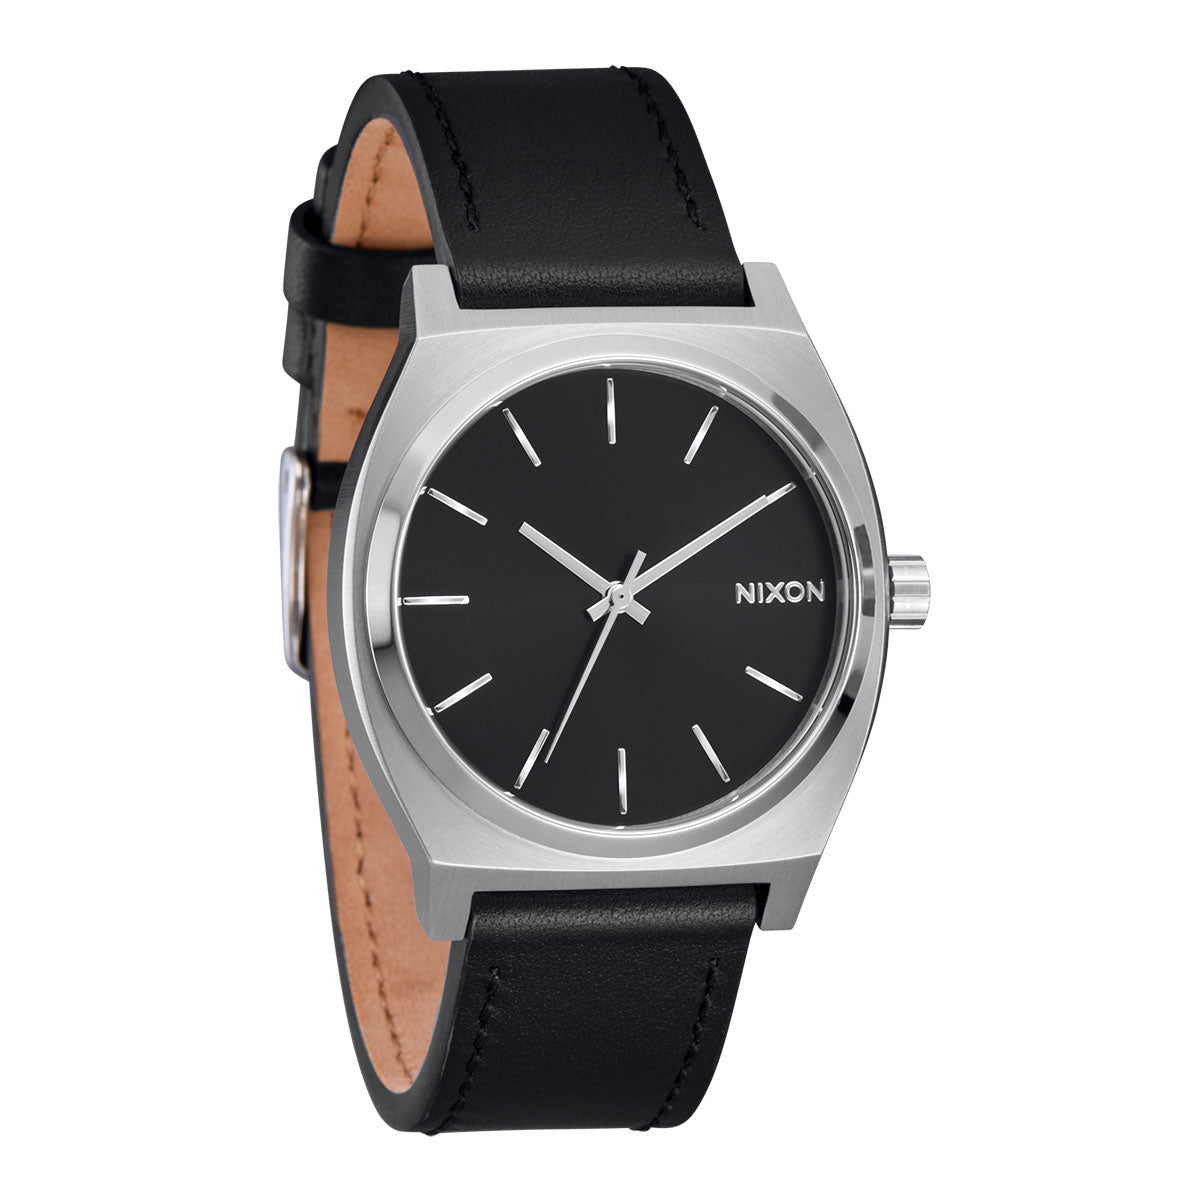 Nixon Time Teller Watch - Silver/Black image 3